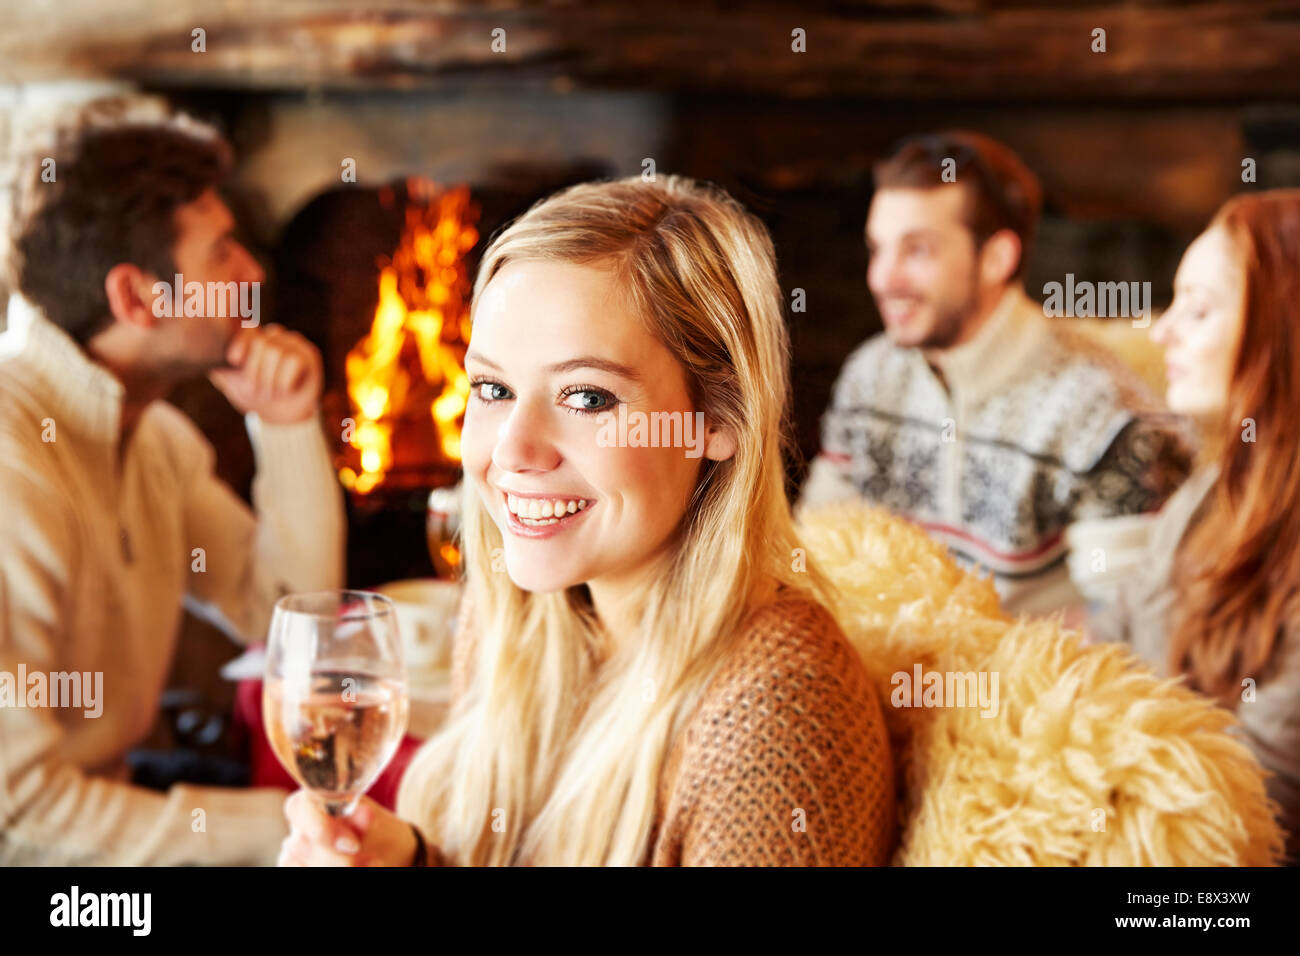 Woman enjoying drinks with friends Stock Photo